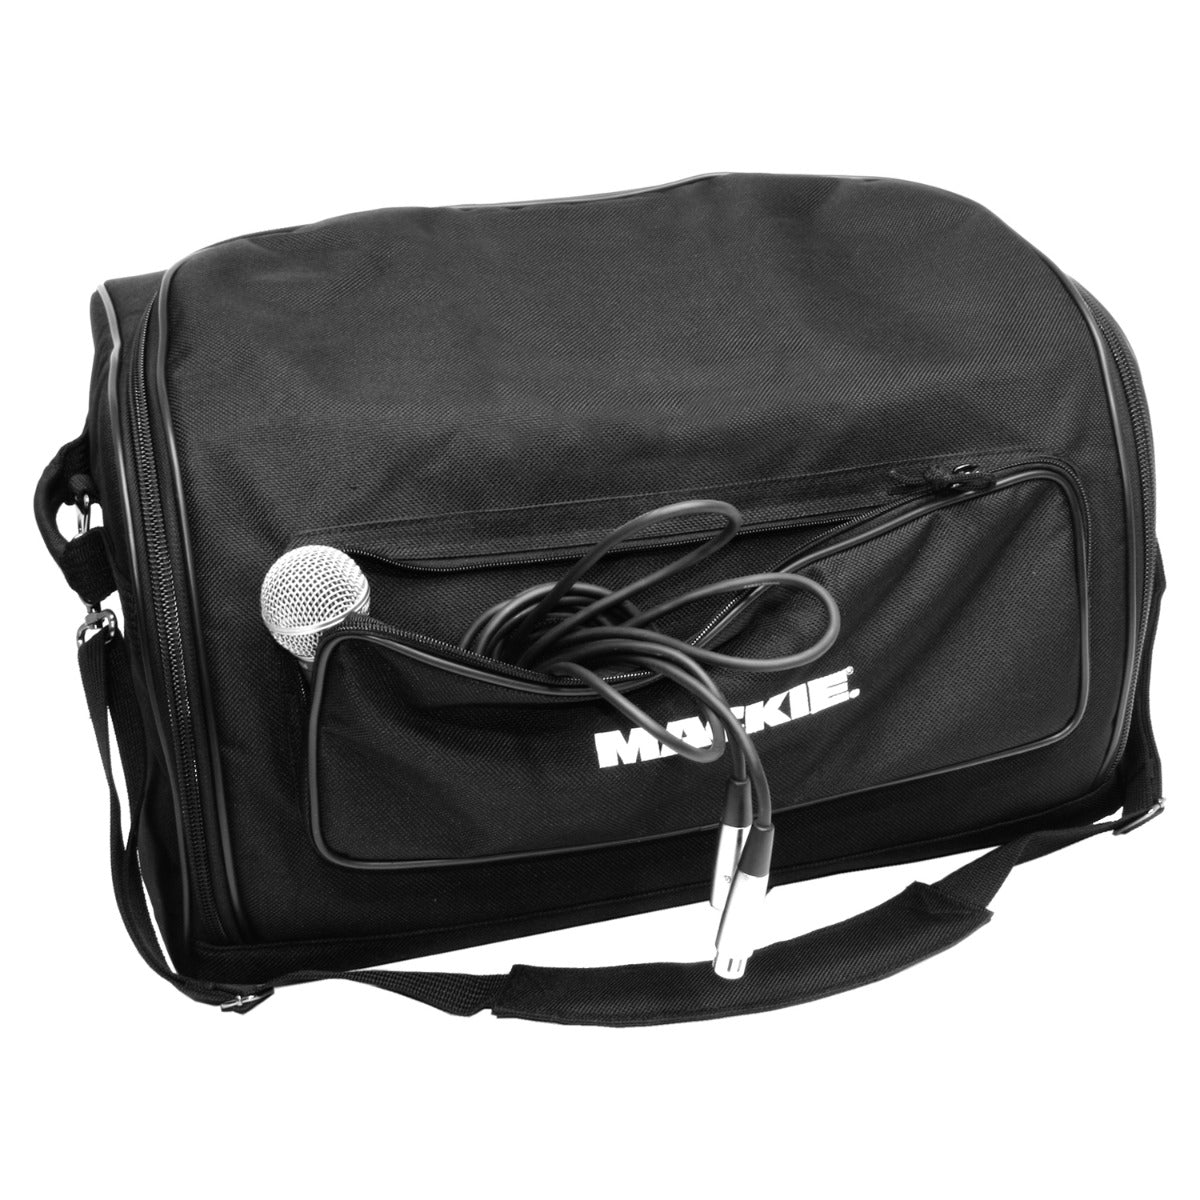 View of Mackie SRM350 / C200 Speaker Bag showing accessory pocket